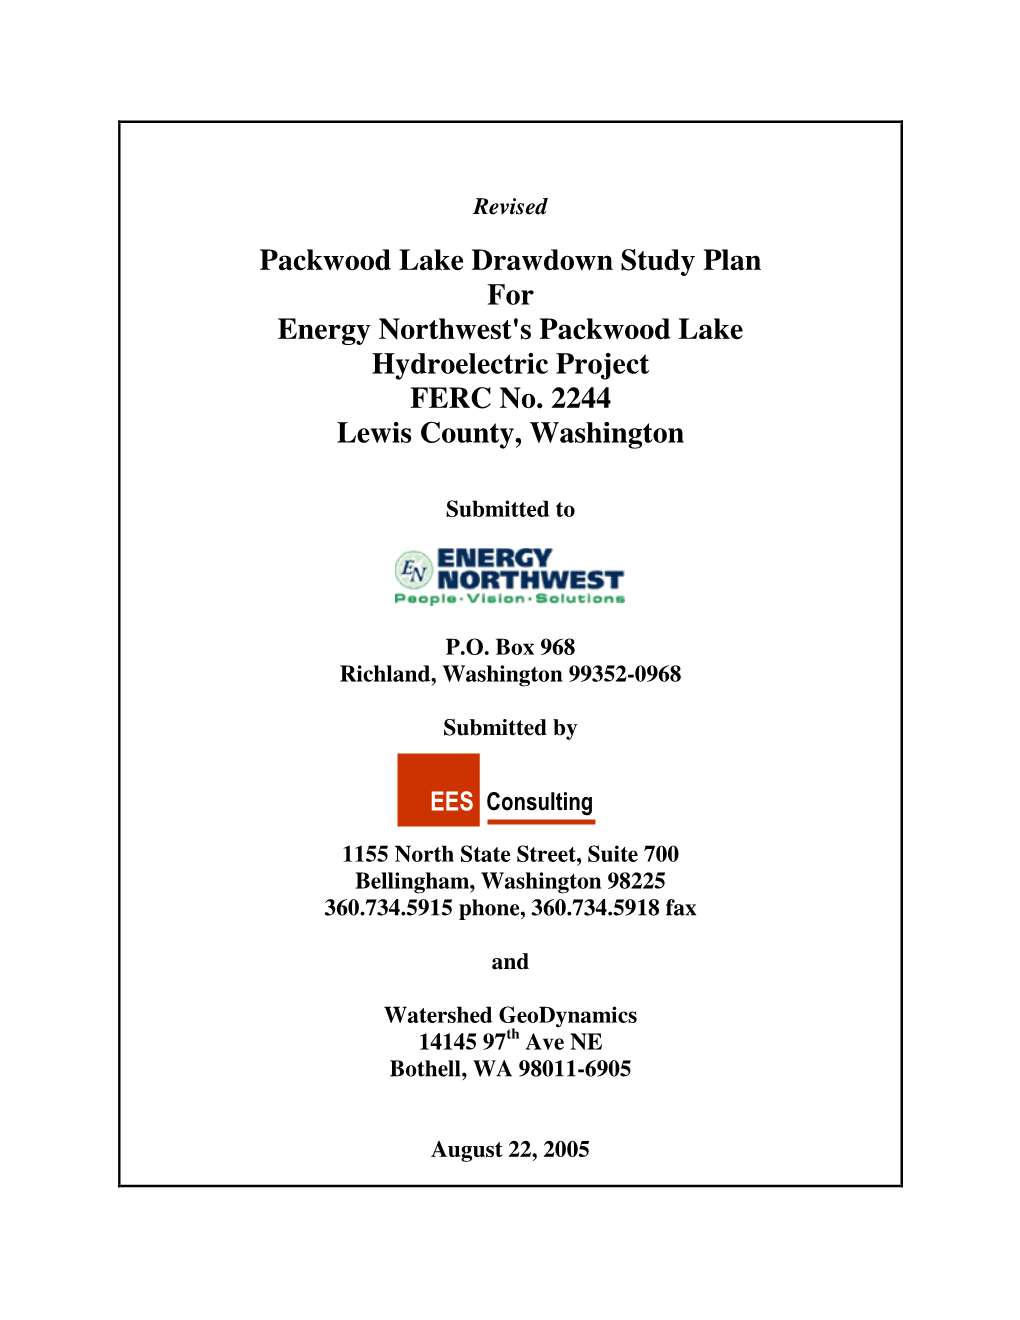 Packwood Lake Drawdown Study Plan for Energy Northwest's Packwood Lake Hydroelectric Project FERC No